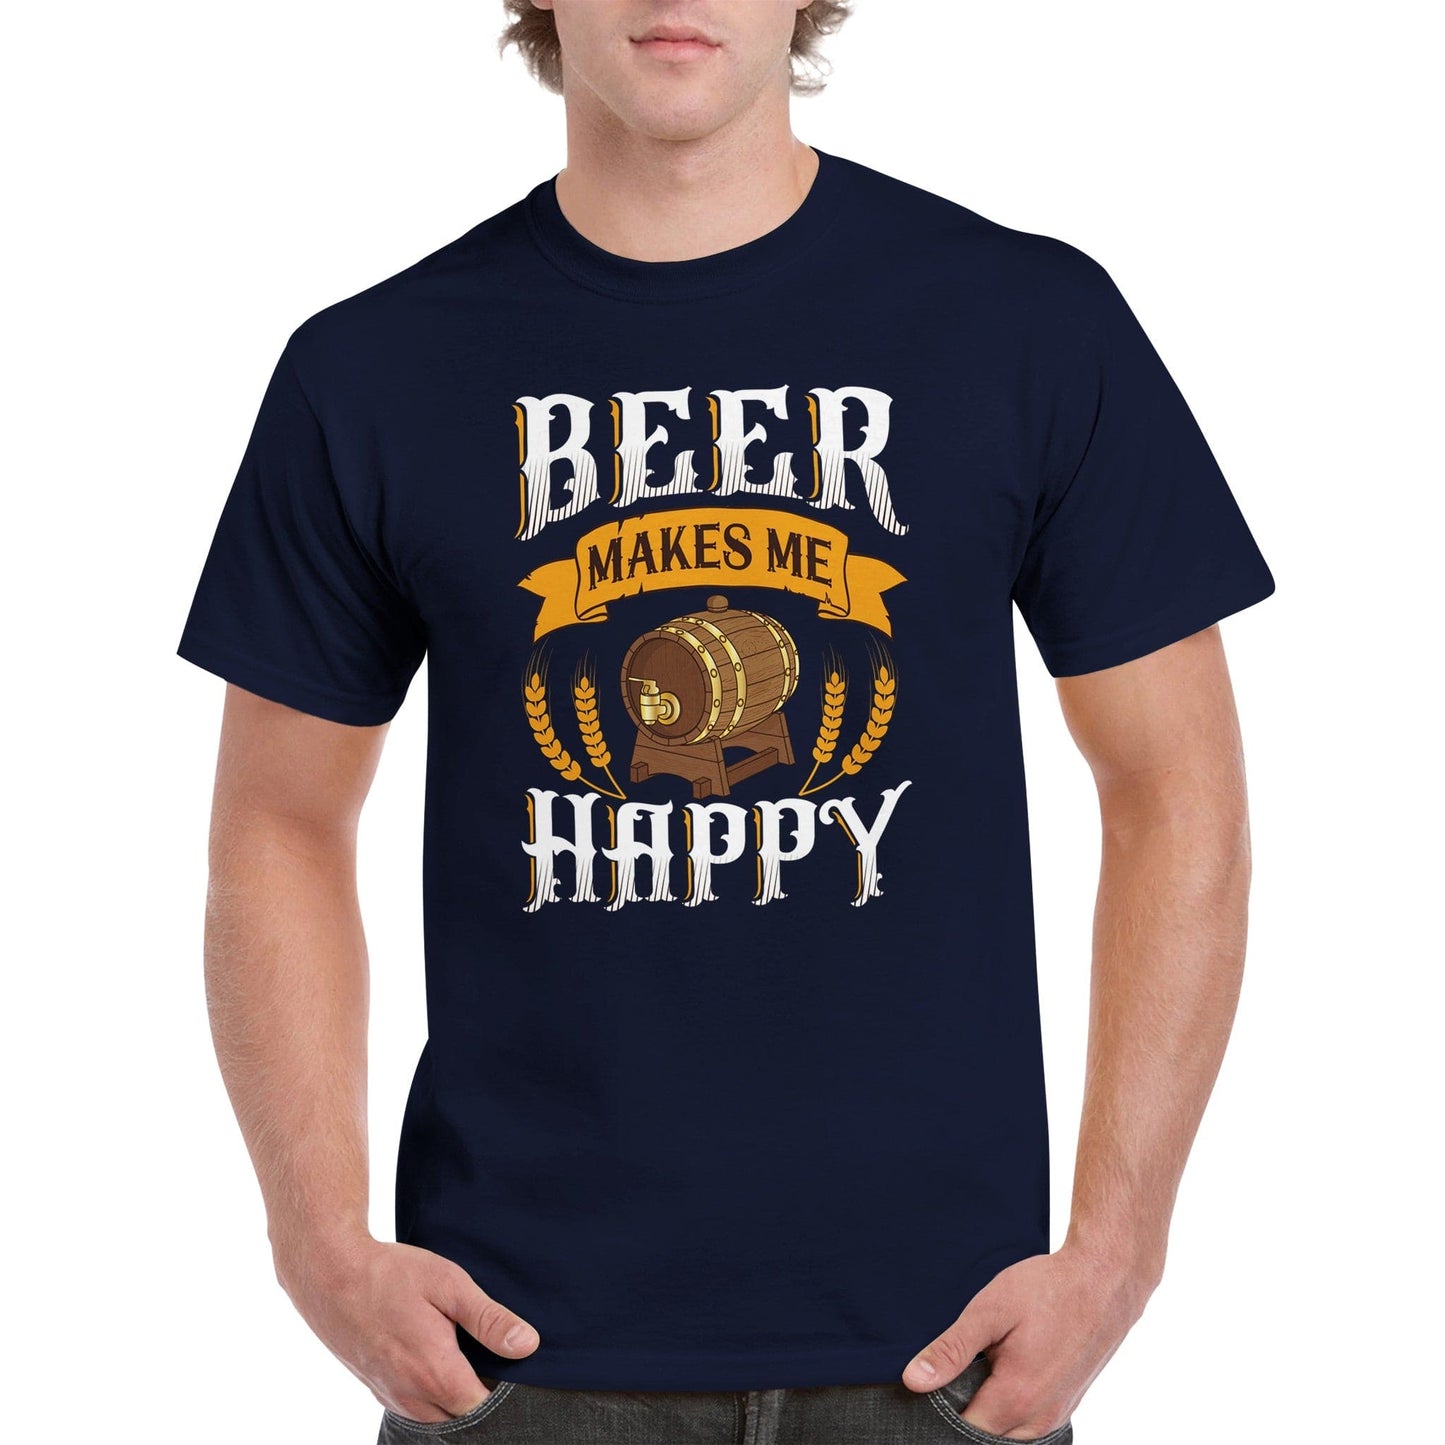 "L'ours me rend heureux" T-shirt